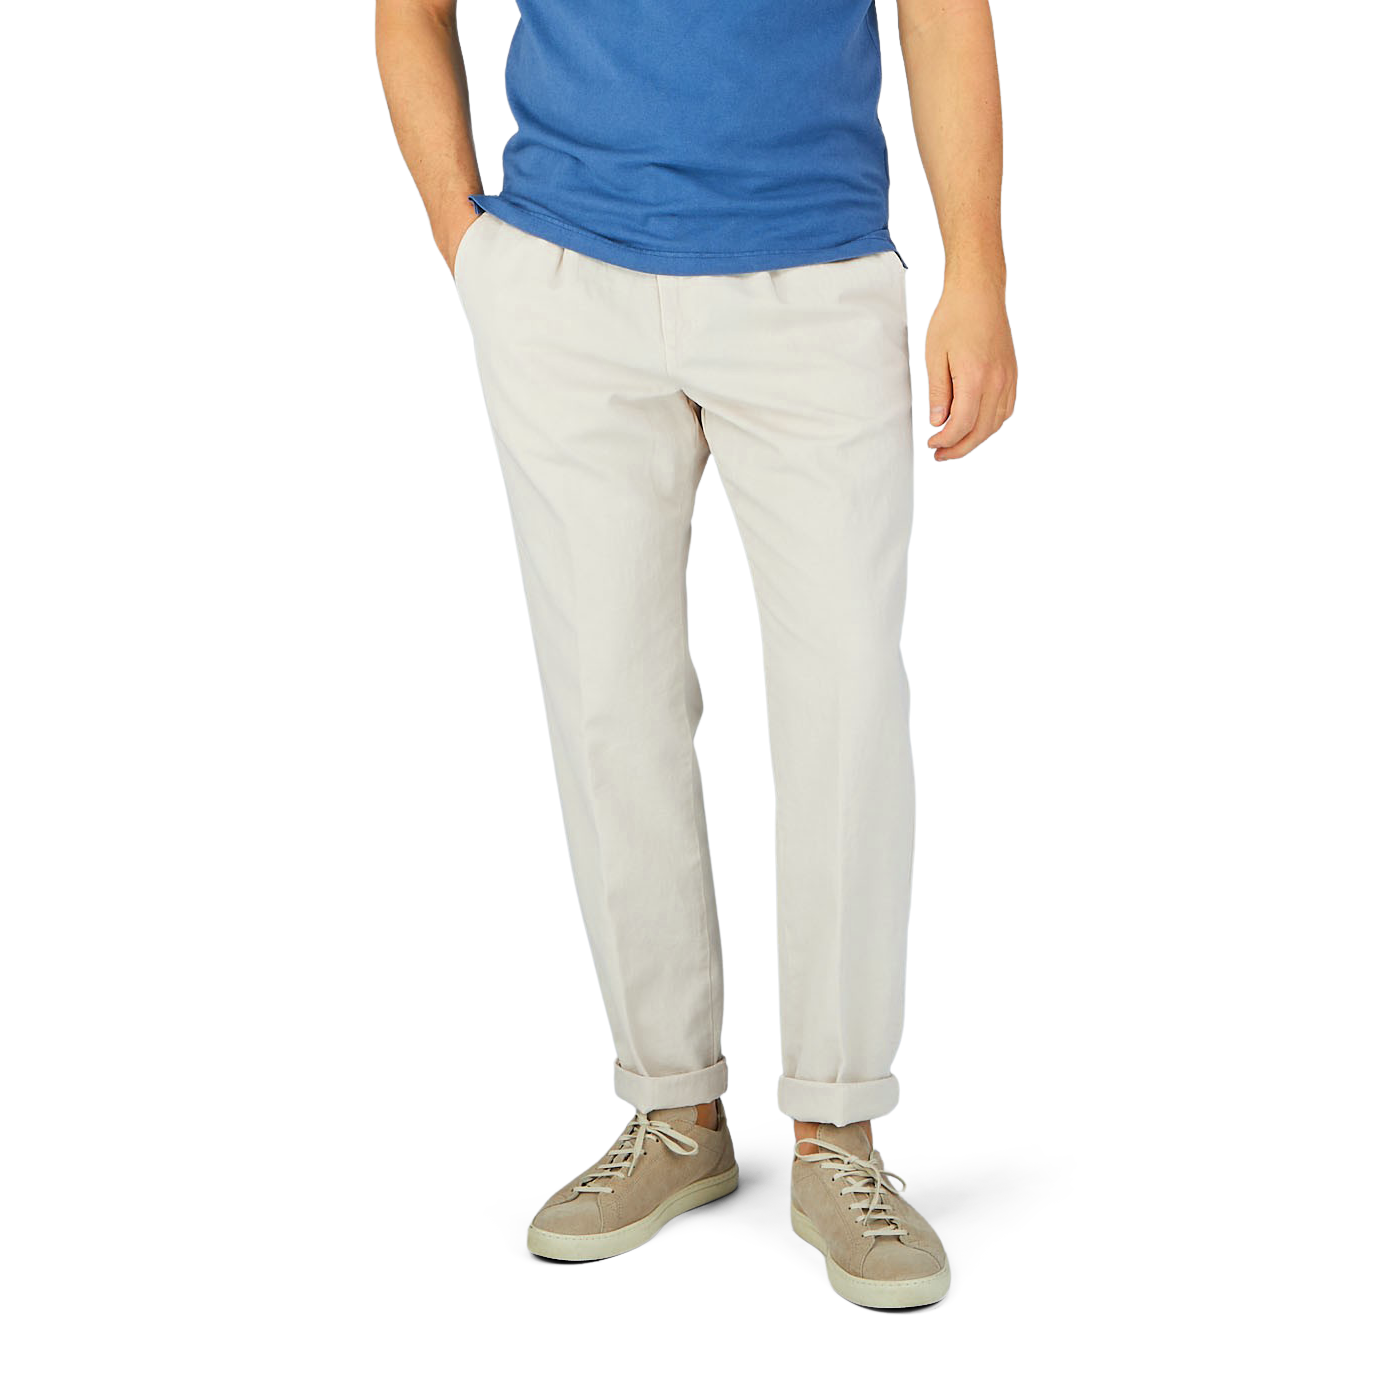 A man in a blue t-shirt and Briglia Ecru Beige Cotton Linen BG59 Pleated Chinos.